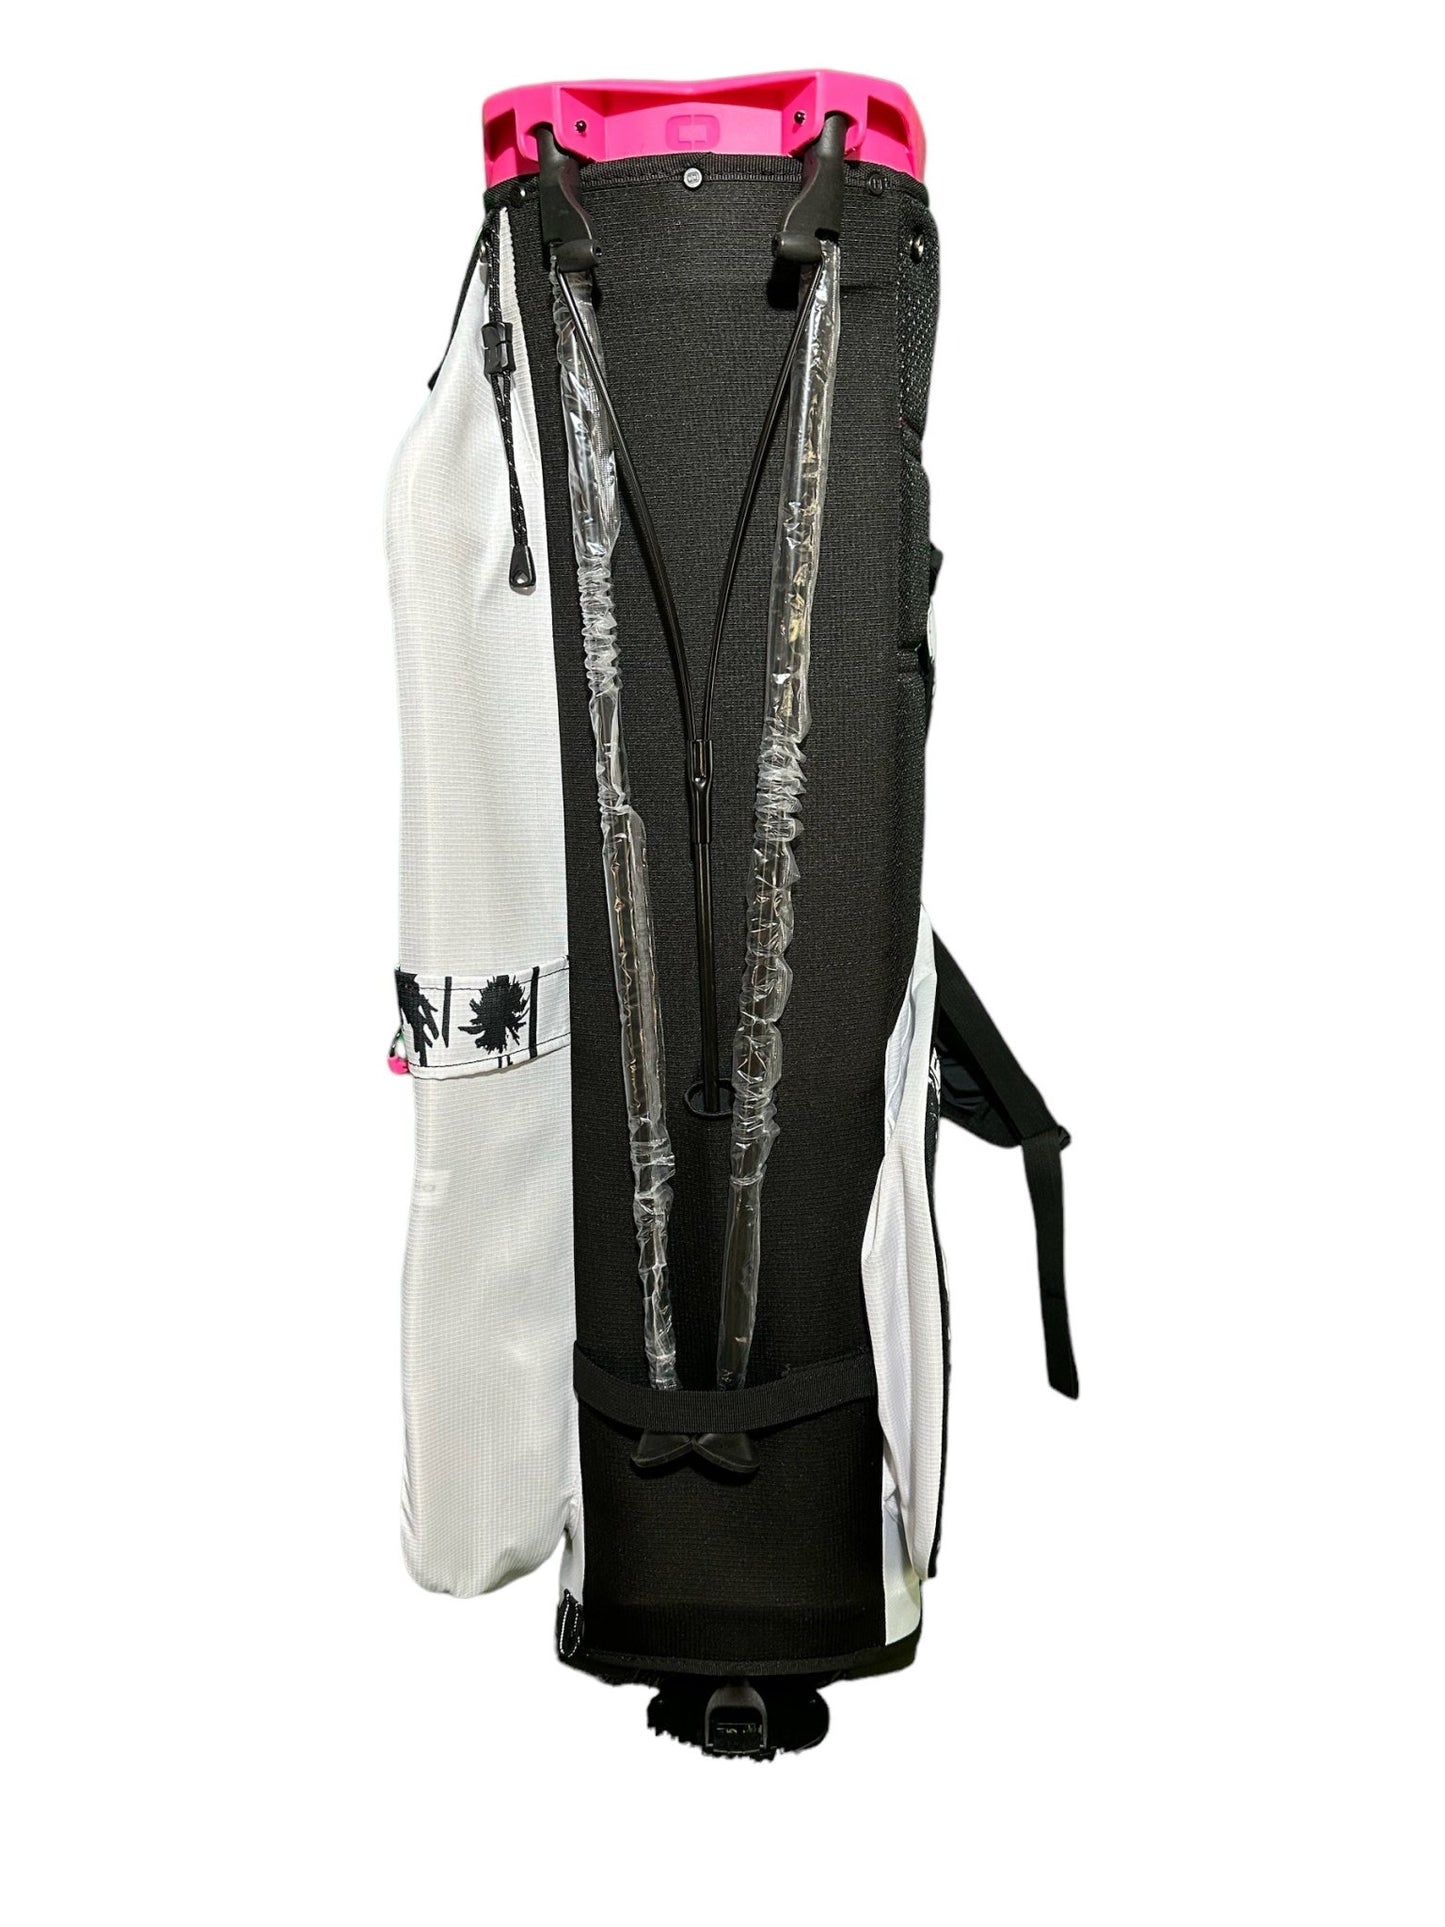 (New) OGIO Ladies Bag White, Black and Pink, Stunning Stand Bag - Golf Store UK